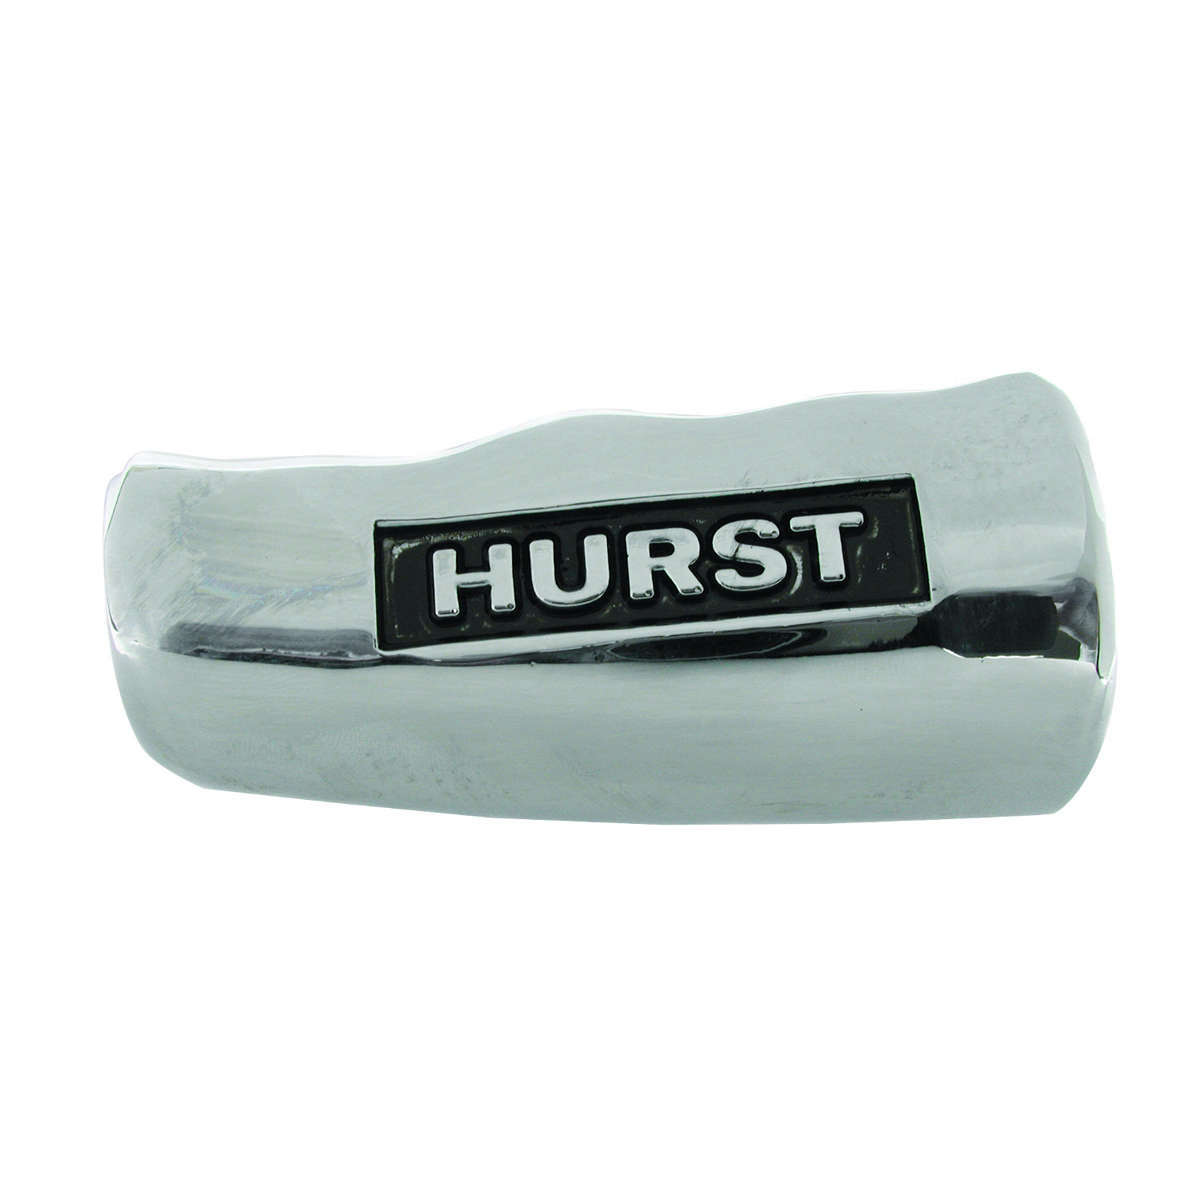 Hurst 153-0032 Shifter Knob, T-Handle, 1/4-28, 5/16-18, 3/8-16 and 1/2-20 in Thread, Hurst Logo, Aluminum, Chrome, Universal, Each